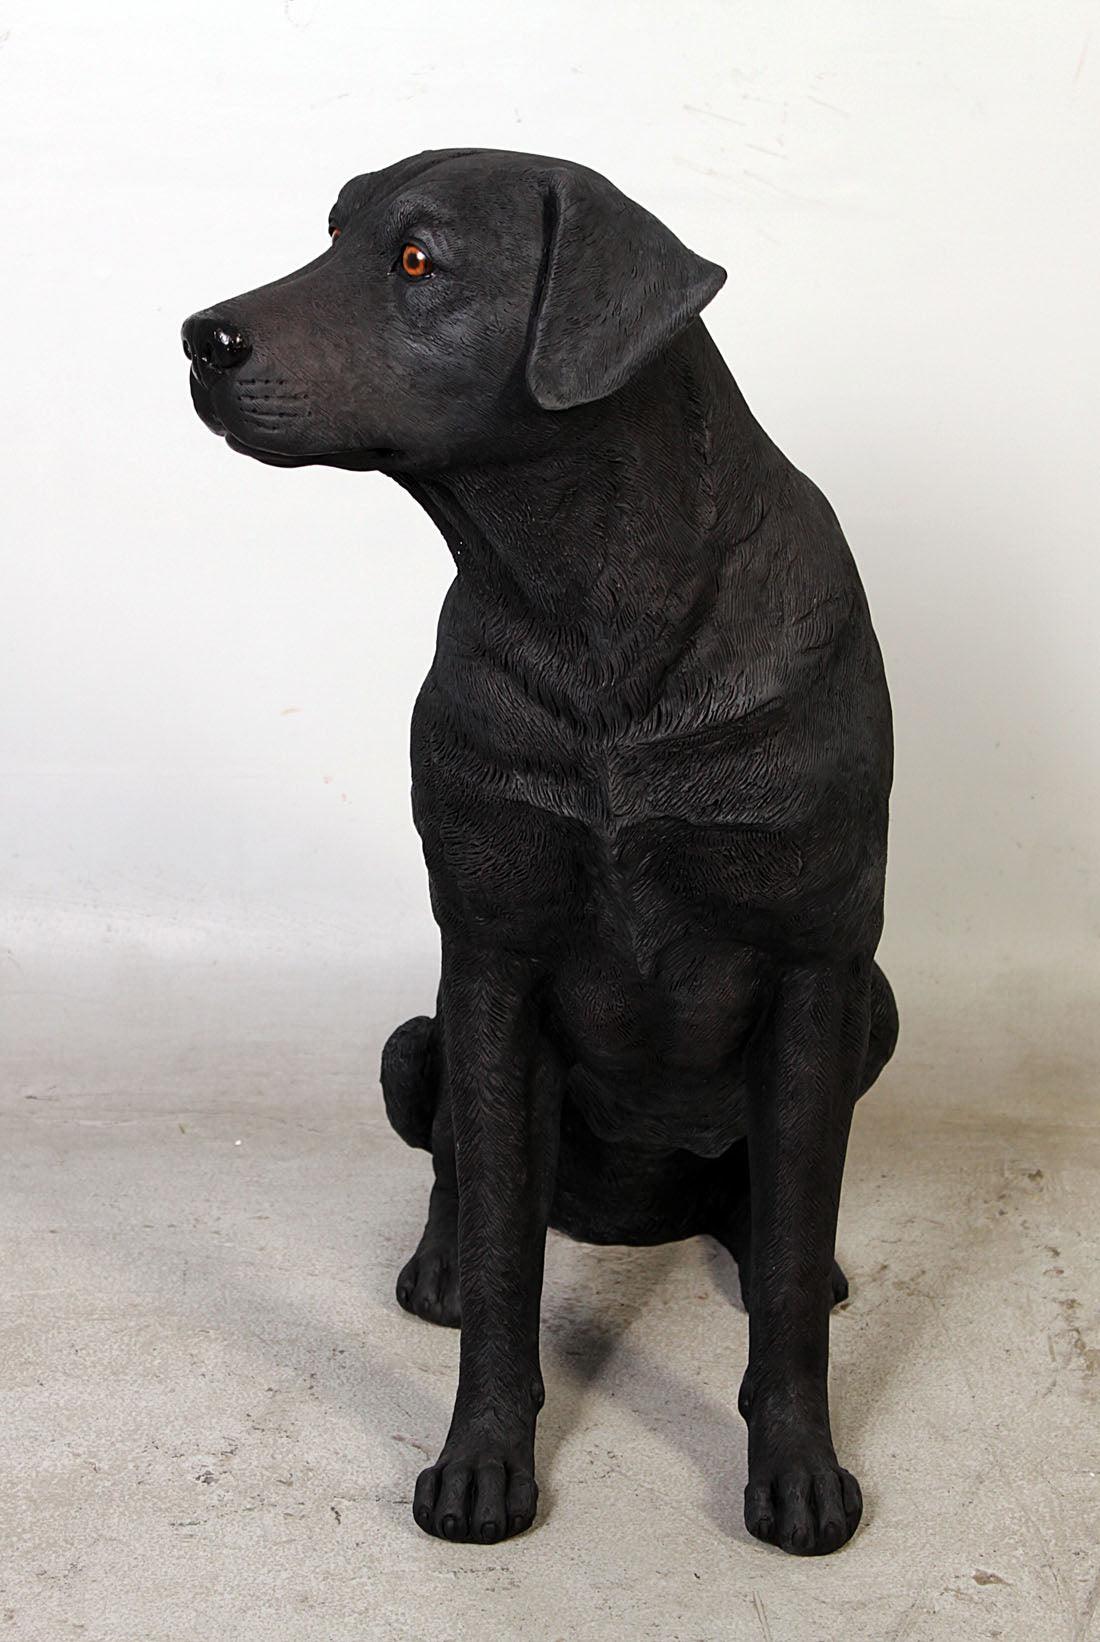 Dog Labrador Sitting Black Animal Prop Life Size D̩ecor Resin Statue - LM Treasures Prop Rentals 